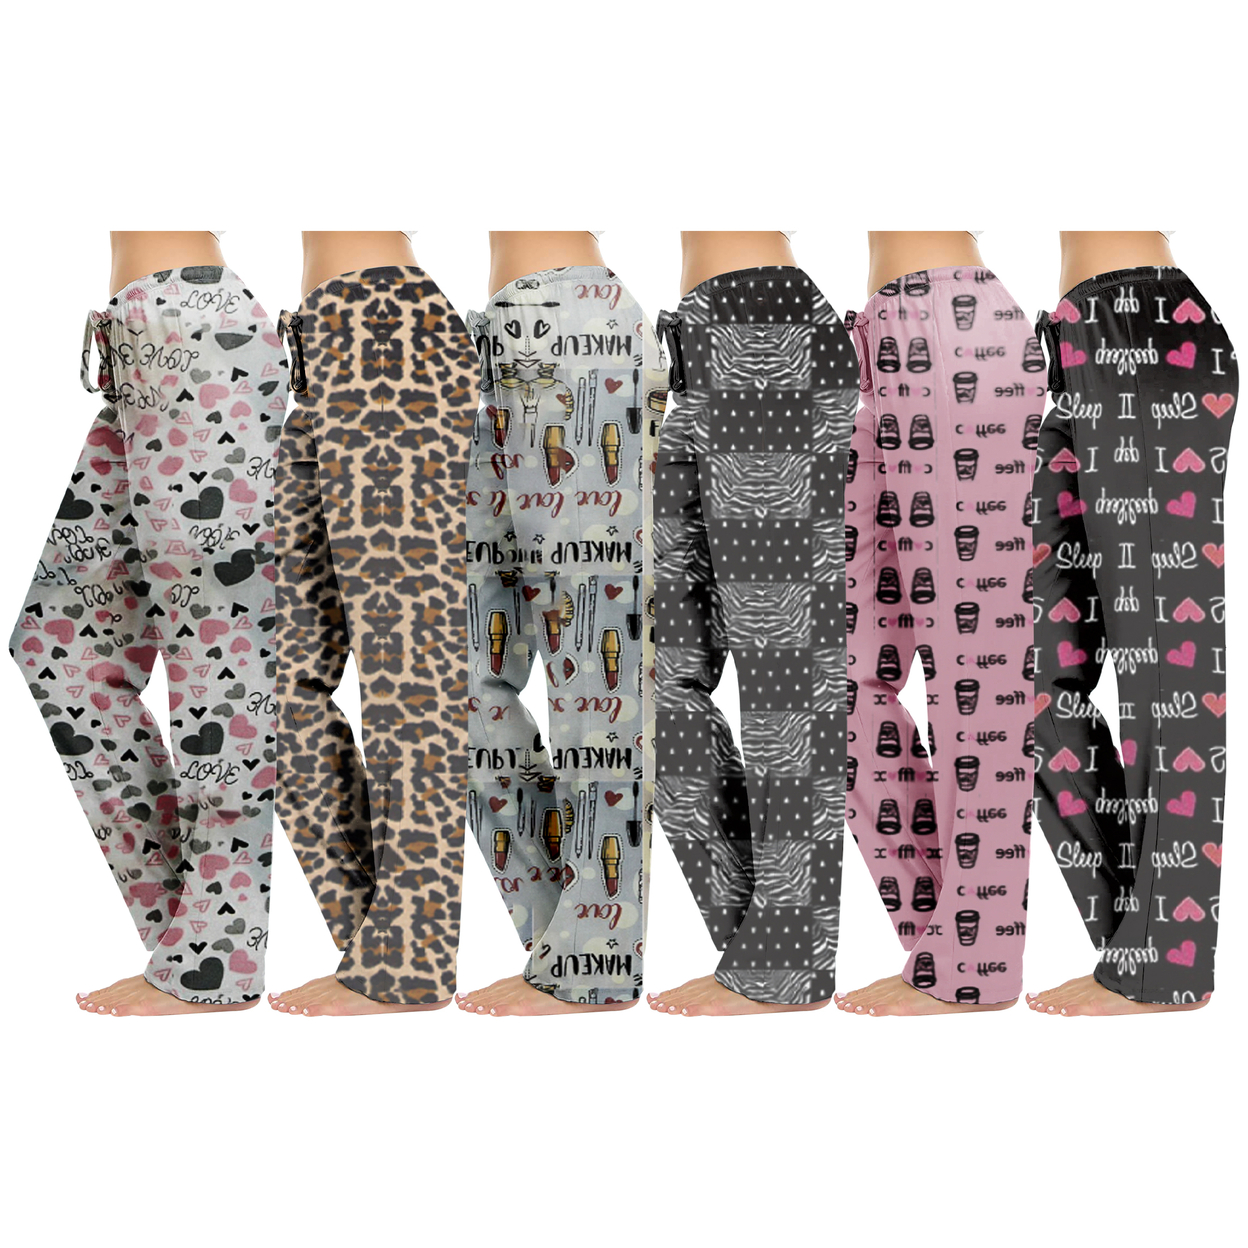 2-Pack: Women's Casual Fun Printed Lightweight Lounge Terry Knit Pajama Bottom Pants - X-large, Love